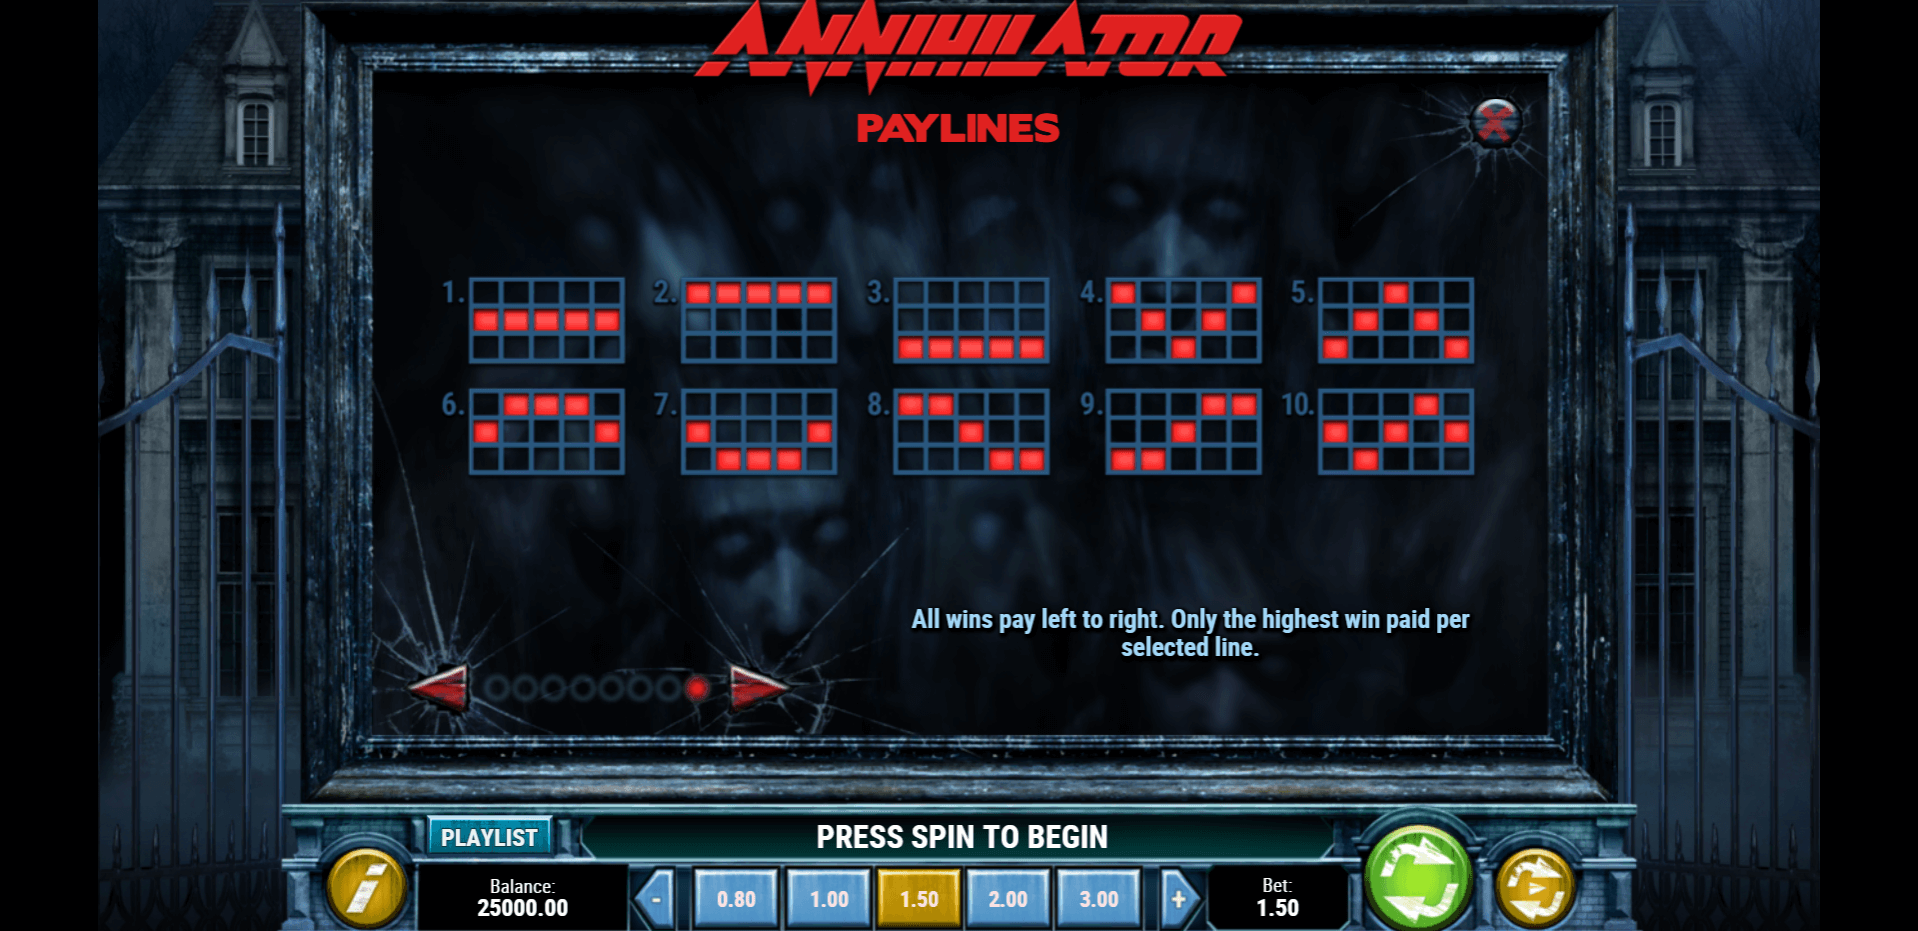 annihilator slot machine detail image 7